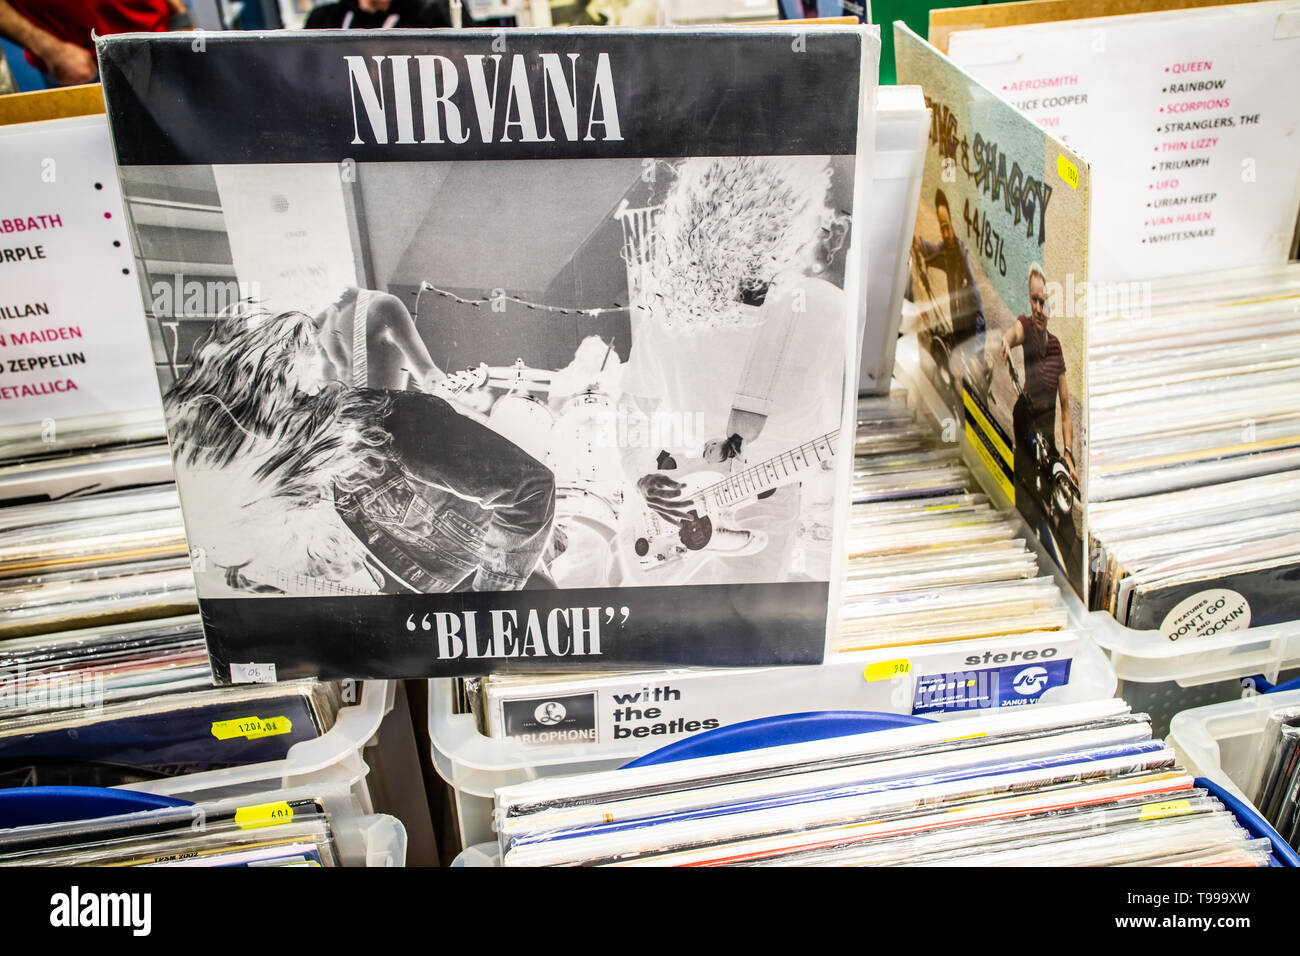 Nadarzyn, Poland, May 11, 2019: Nirvana vinyl album on display for sale,  Vinyl, LP, Album, Pop Rock, American rock band, collection of Vinyl in back  Stock Photo - Alamy